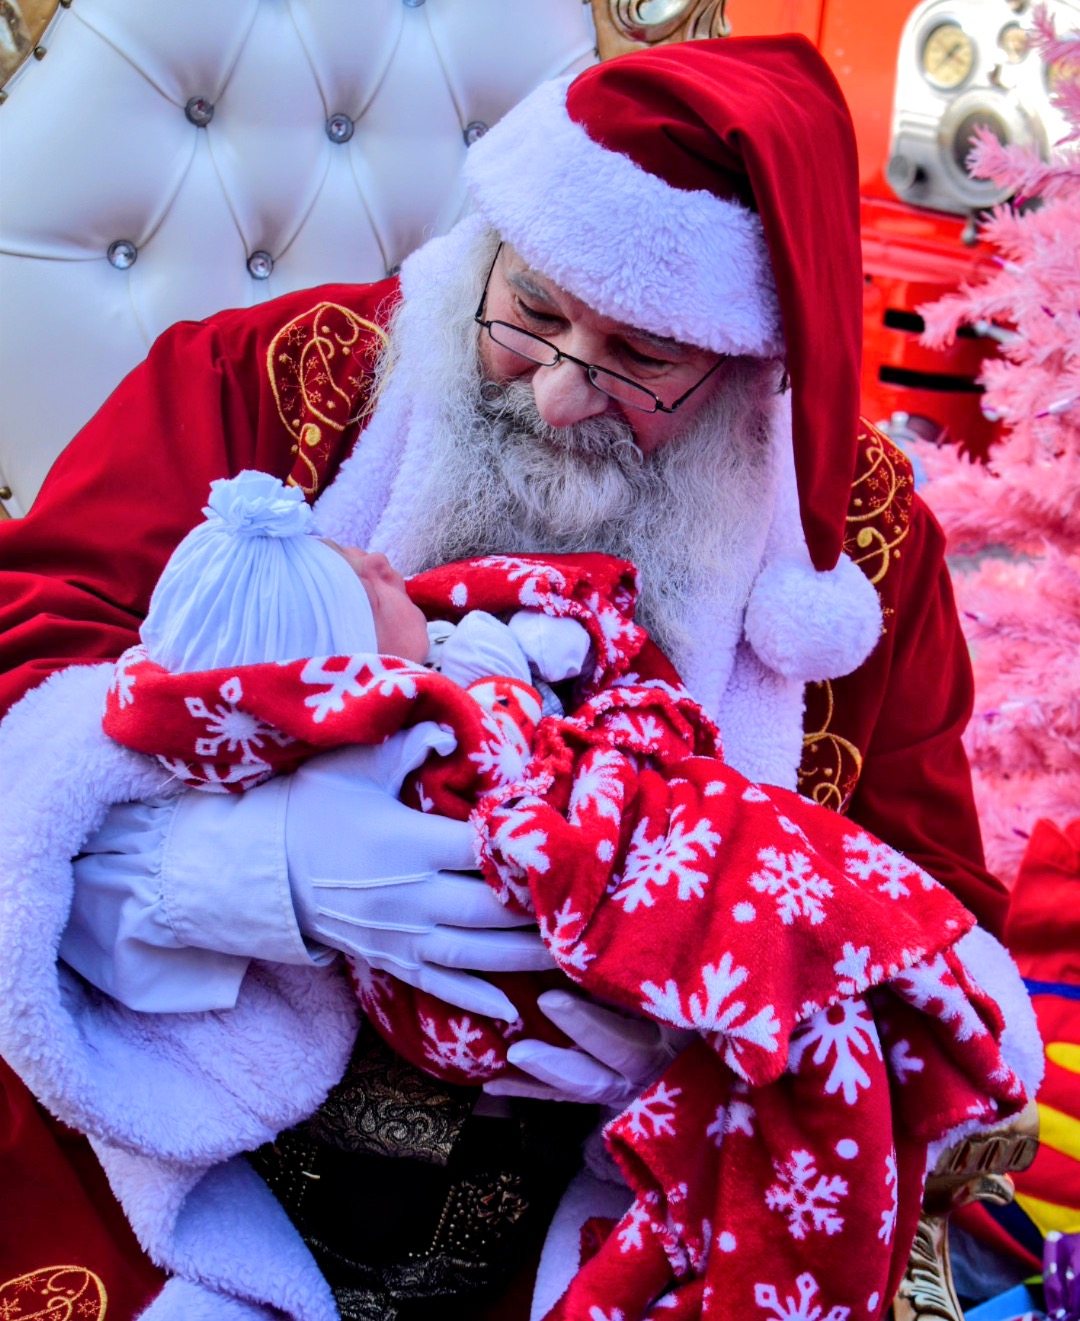 Santa holding baby